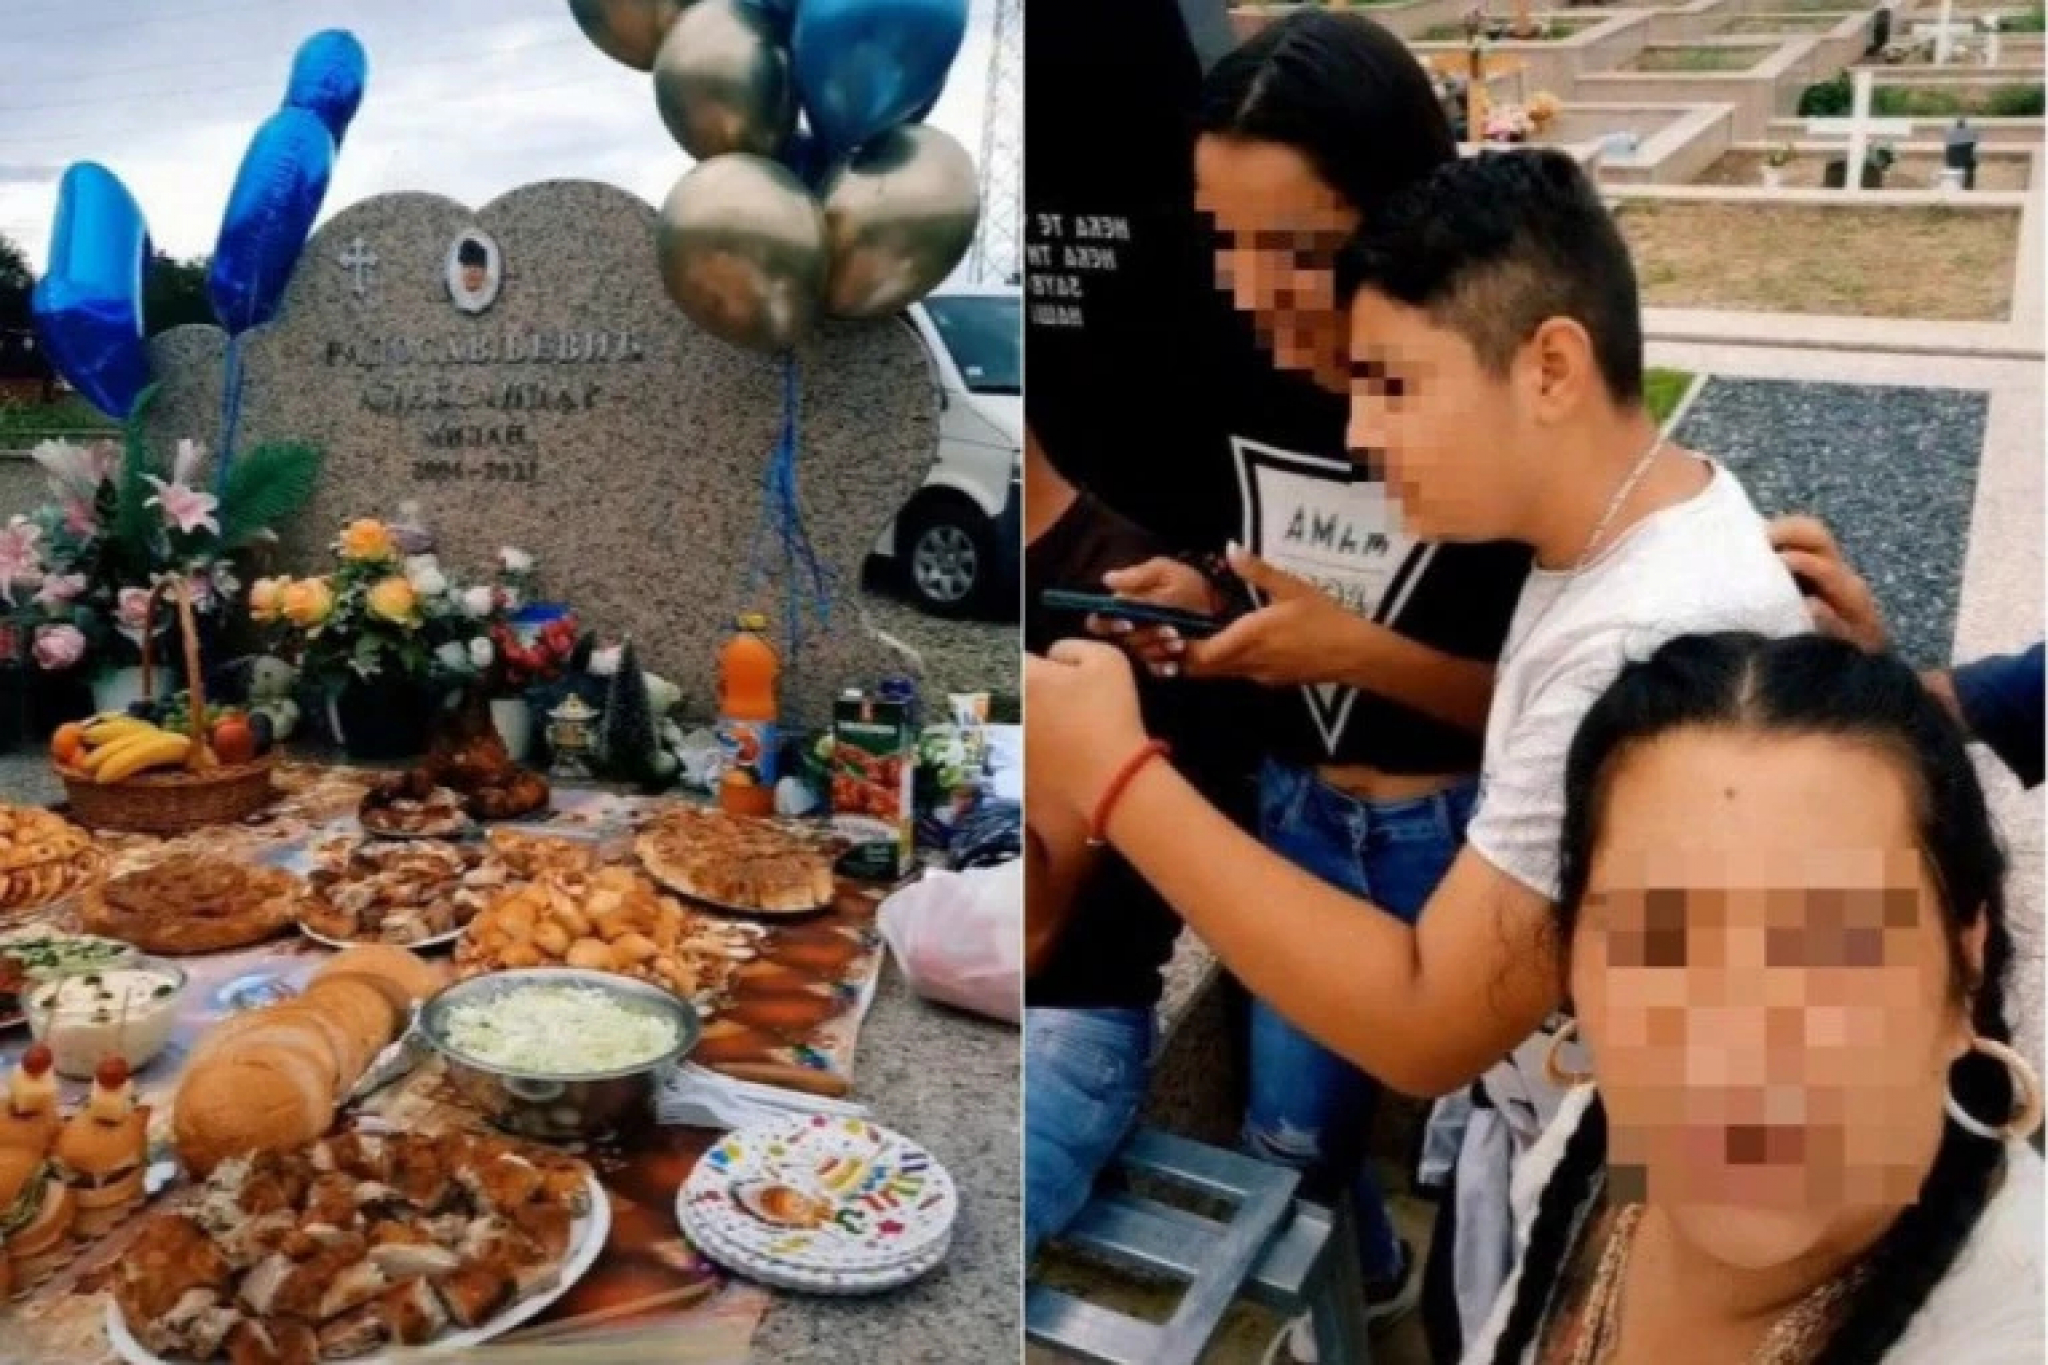 BIZARNOST ILI OBIČAJ Romi pokojniku proslavili punoletstvo -  Baloni na spomeniku, švedski sto na grobu